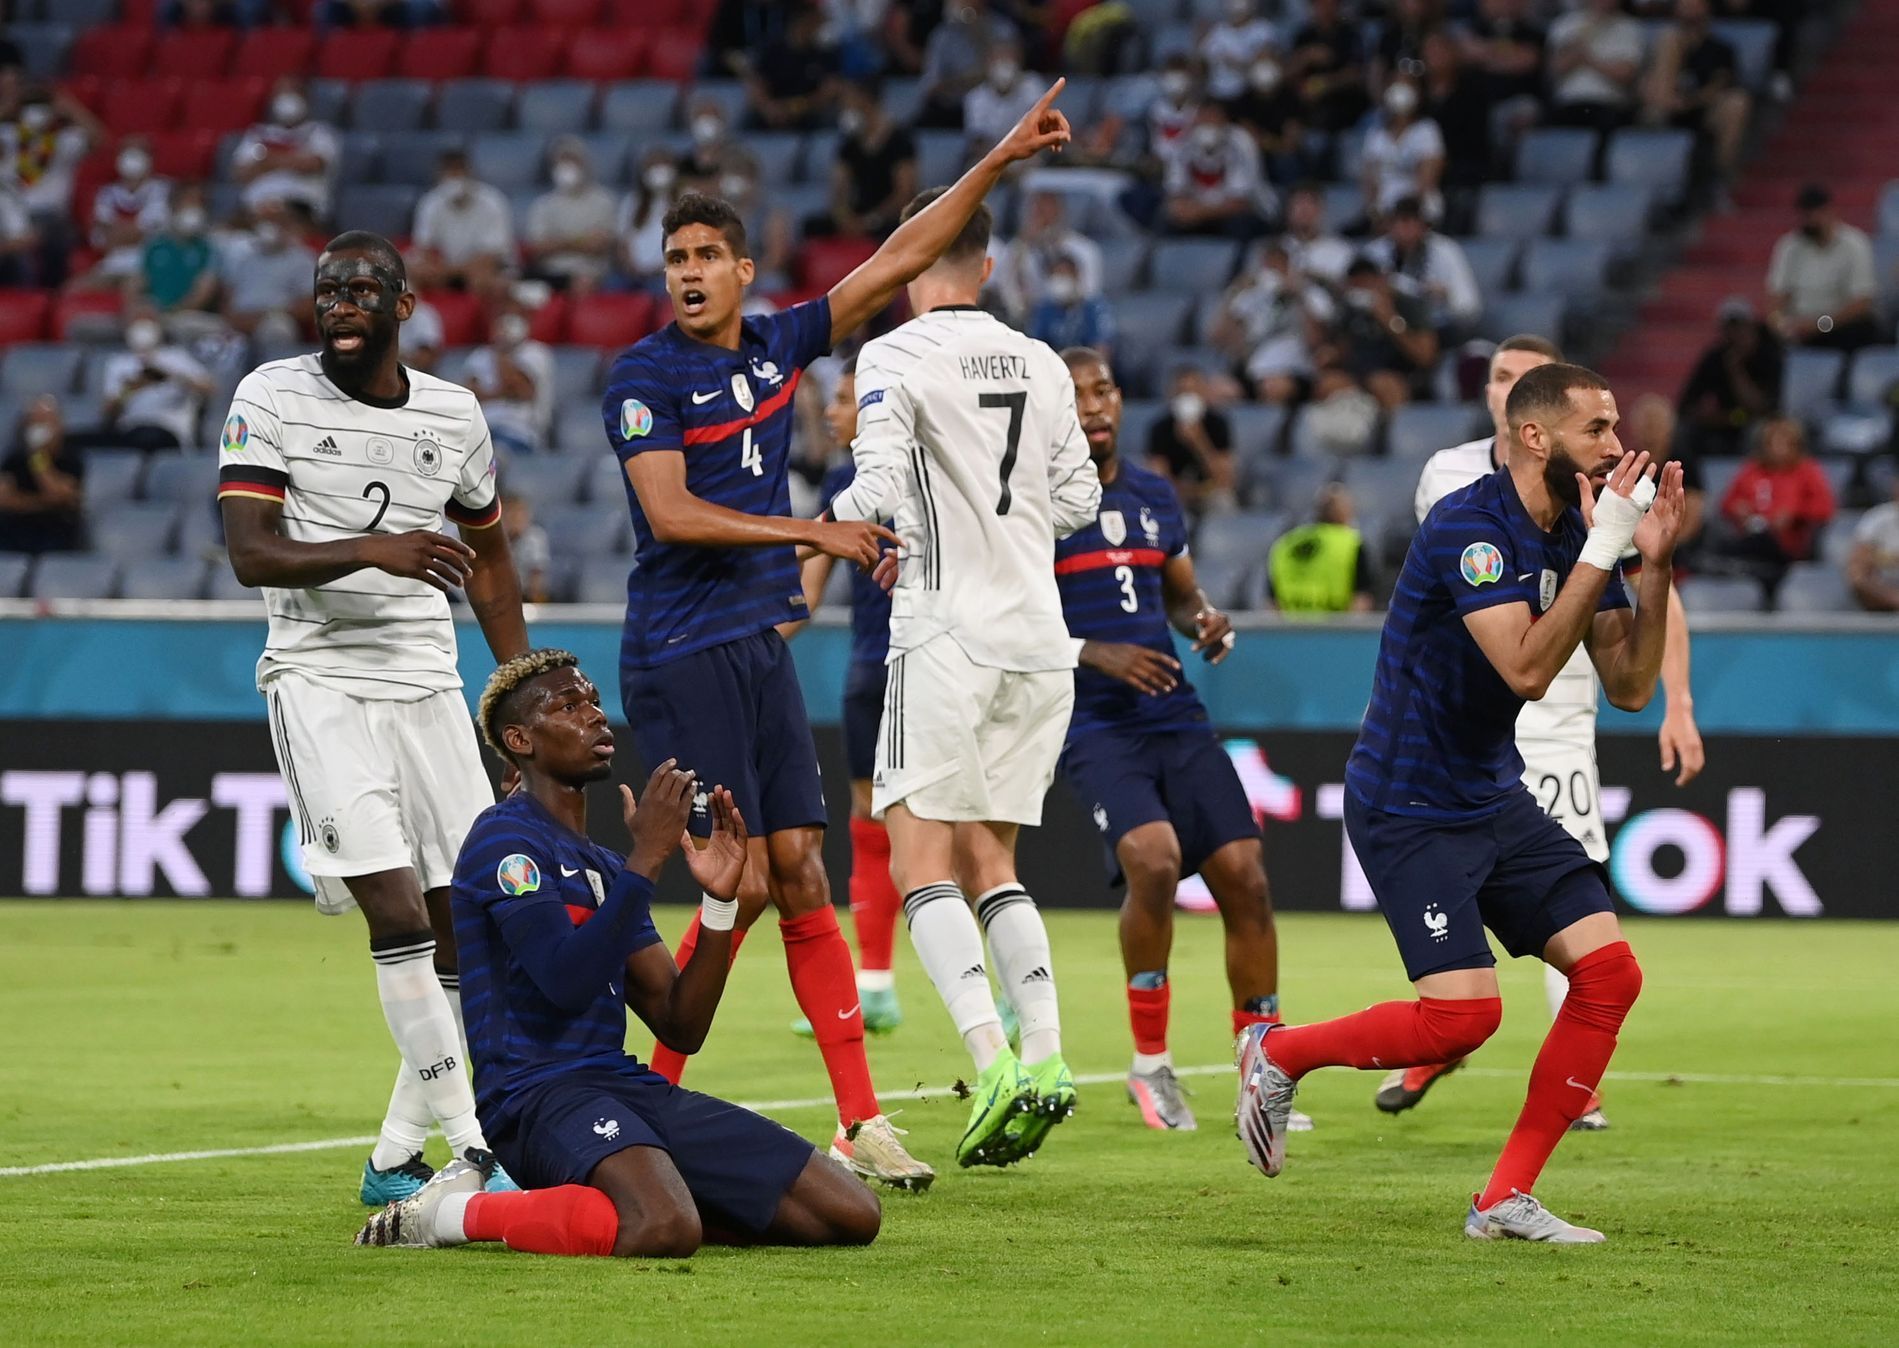 Francie - Německo, Euro 2021